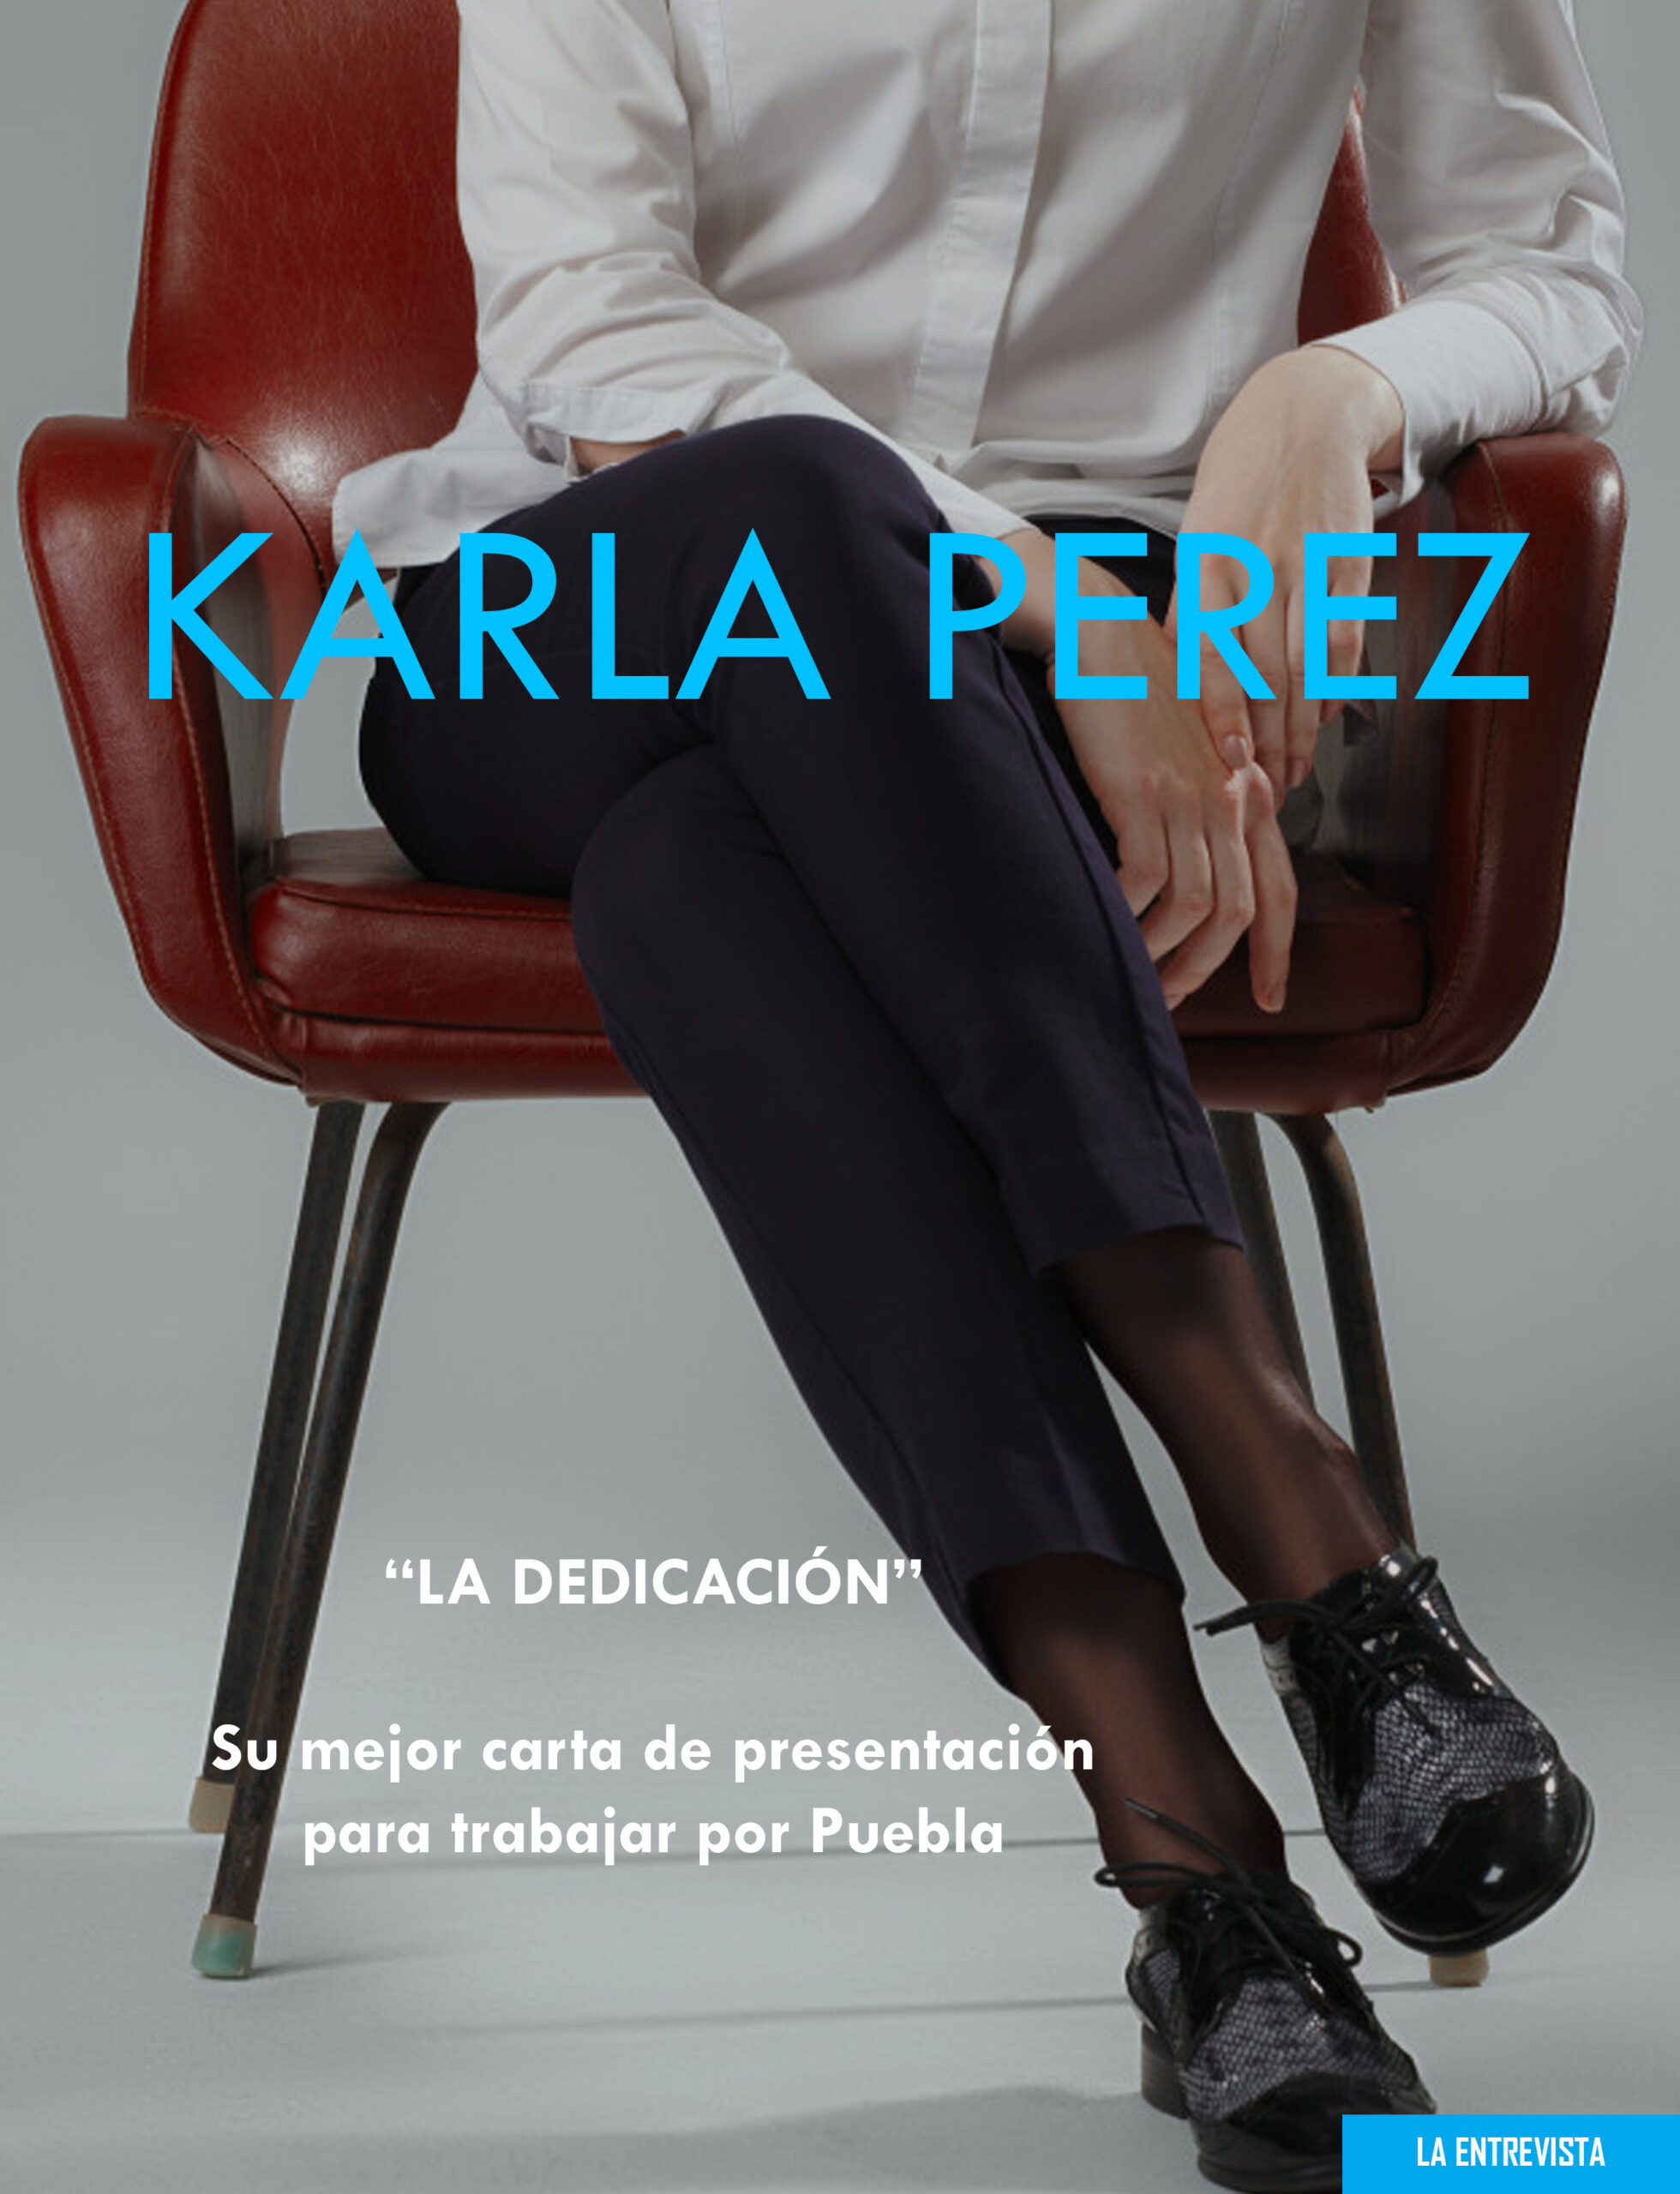 Karla Perez